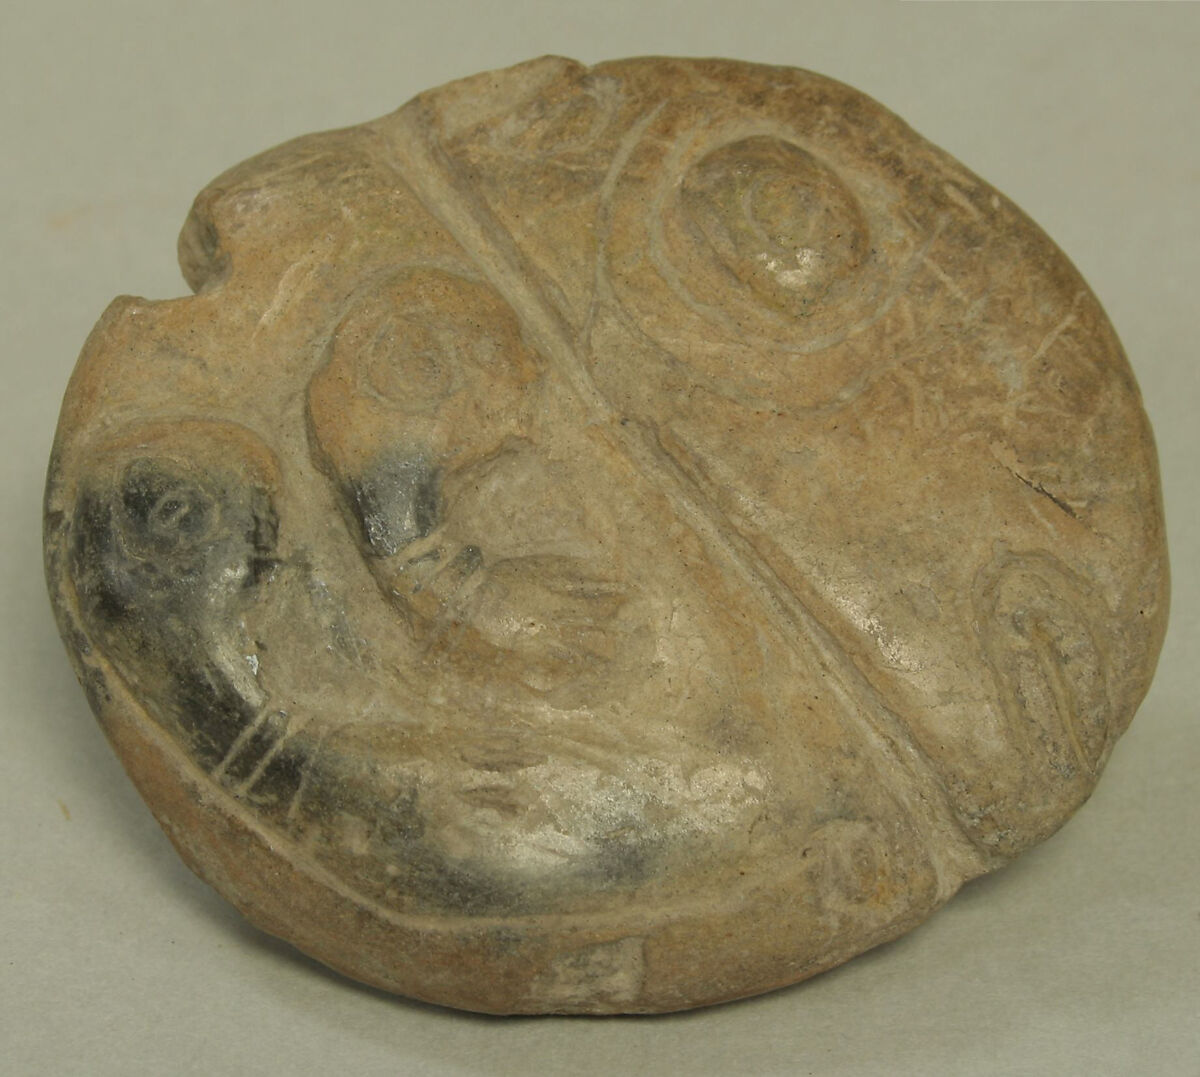 Stone Object with Relief Figures, Ceramic, Ecuador 